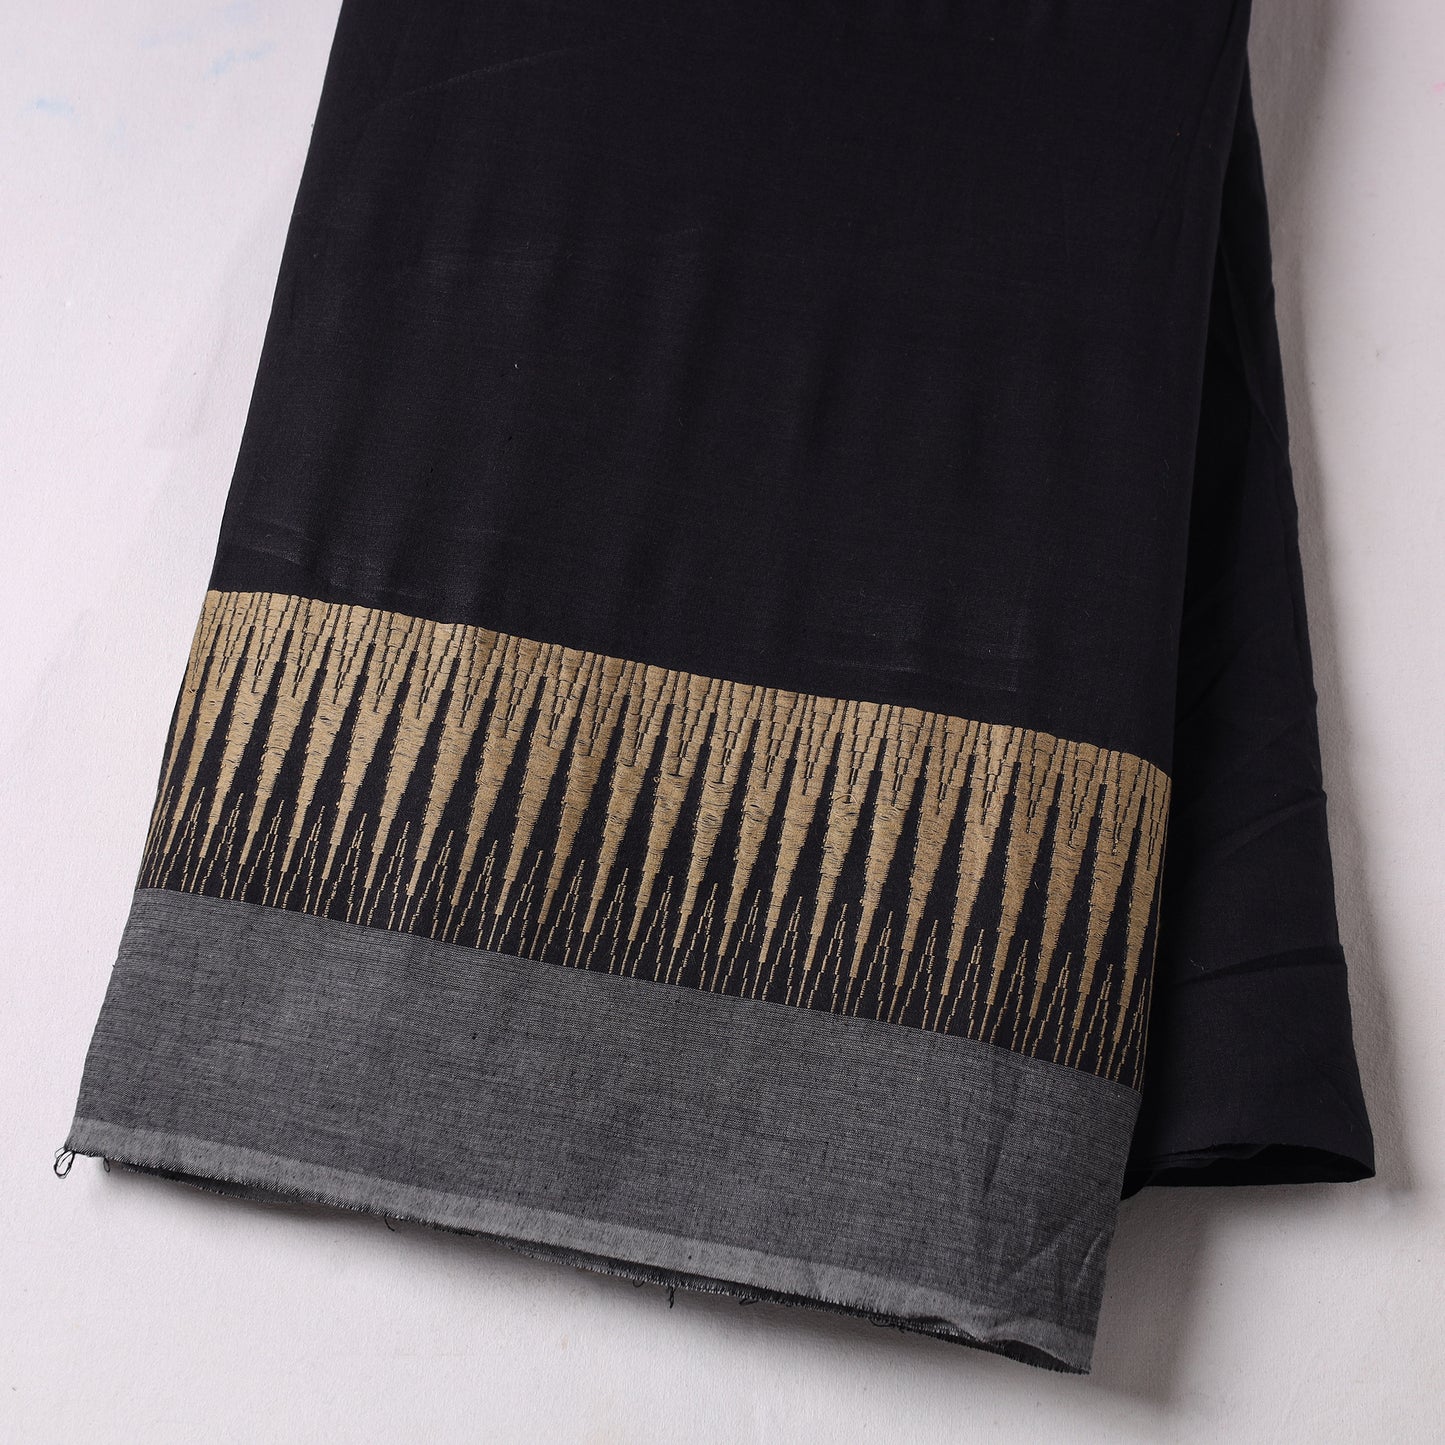 Prewashed Dharwad Cotton Thread Border Fabric 26